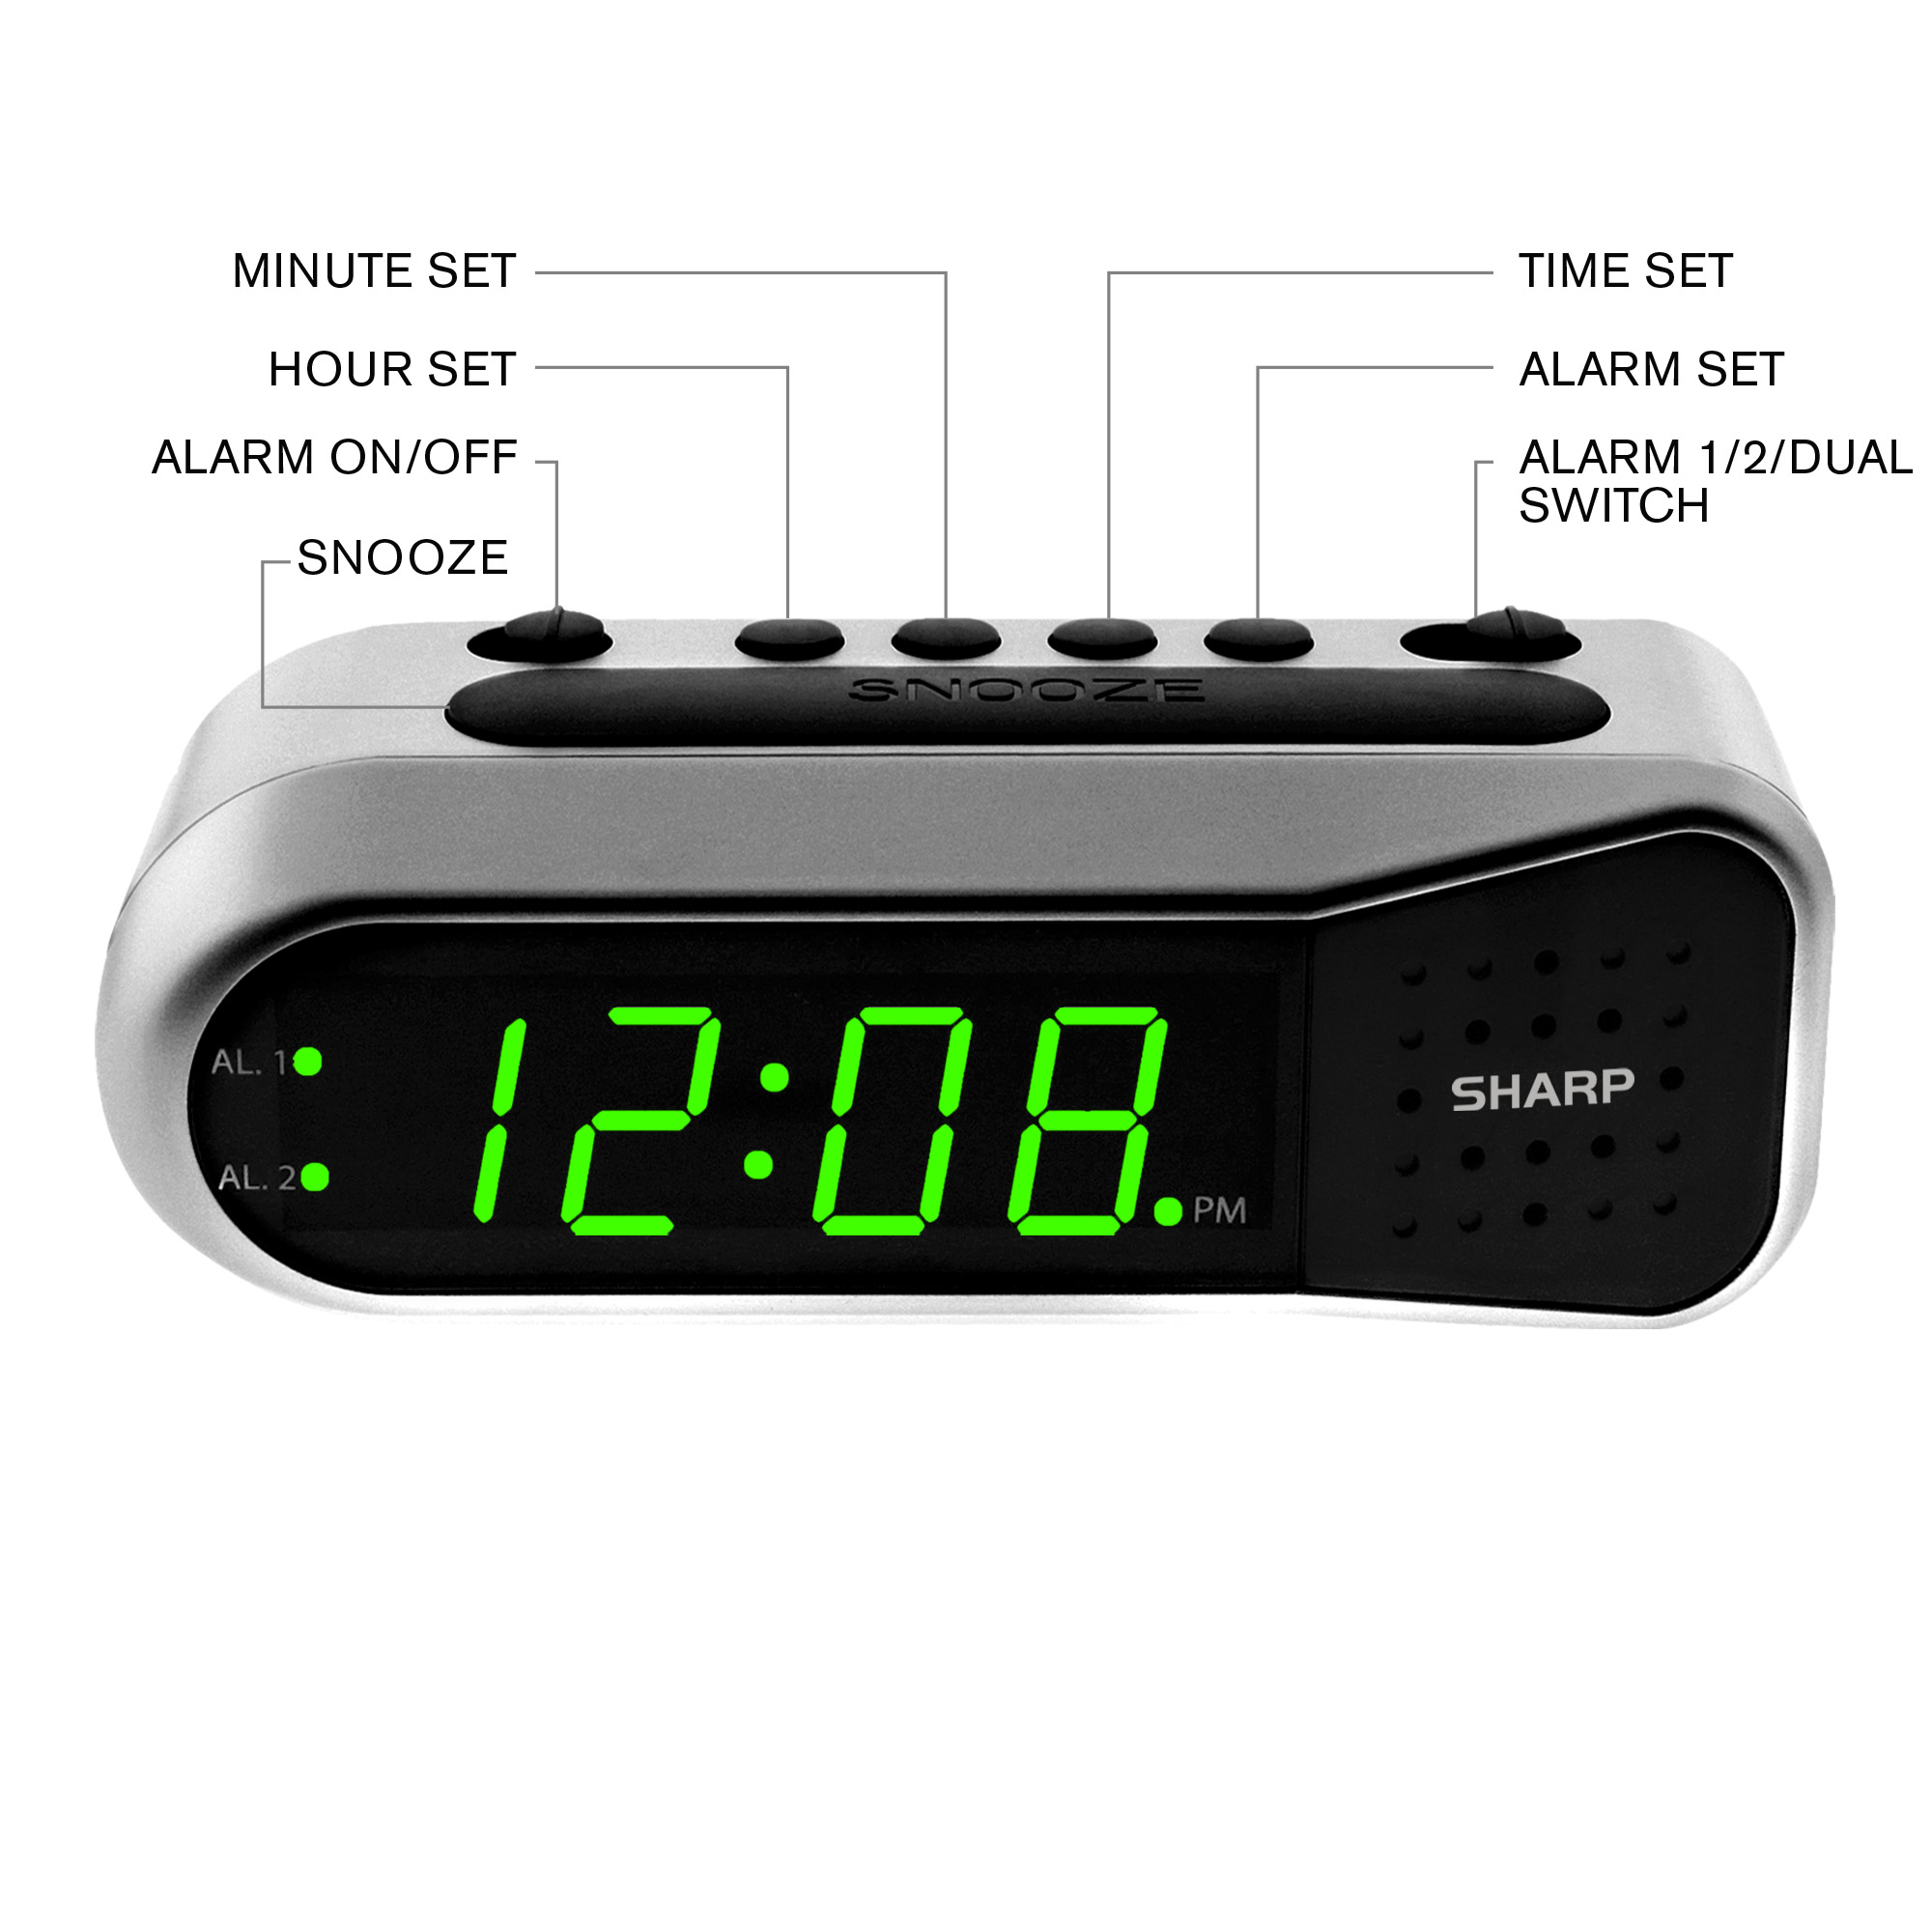 SHARP Digital Dual Alarm Clock, Silver with Green LED Display, Ascending Alarm - image 4 of 6